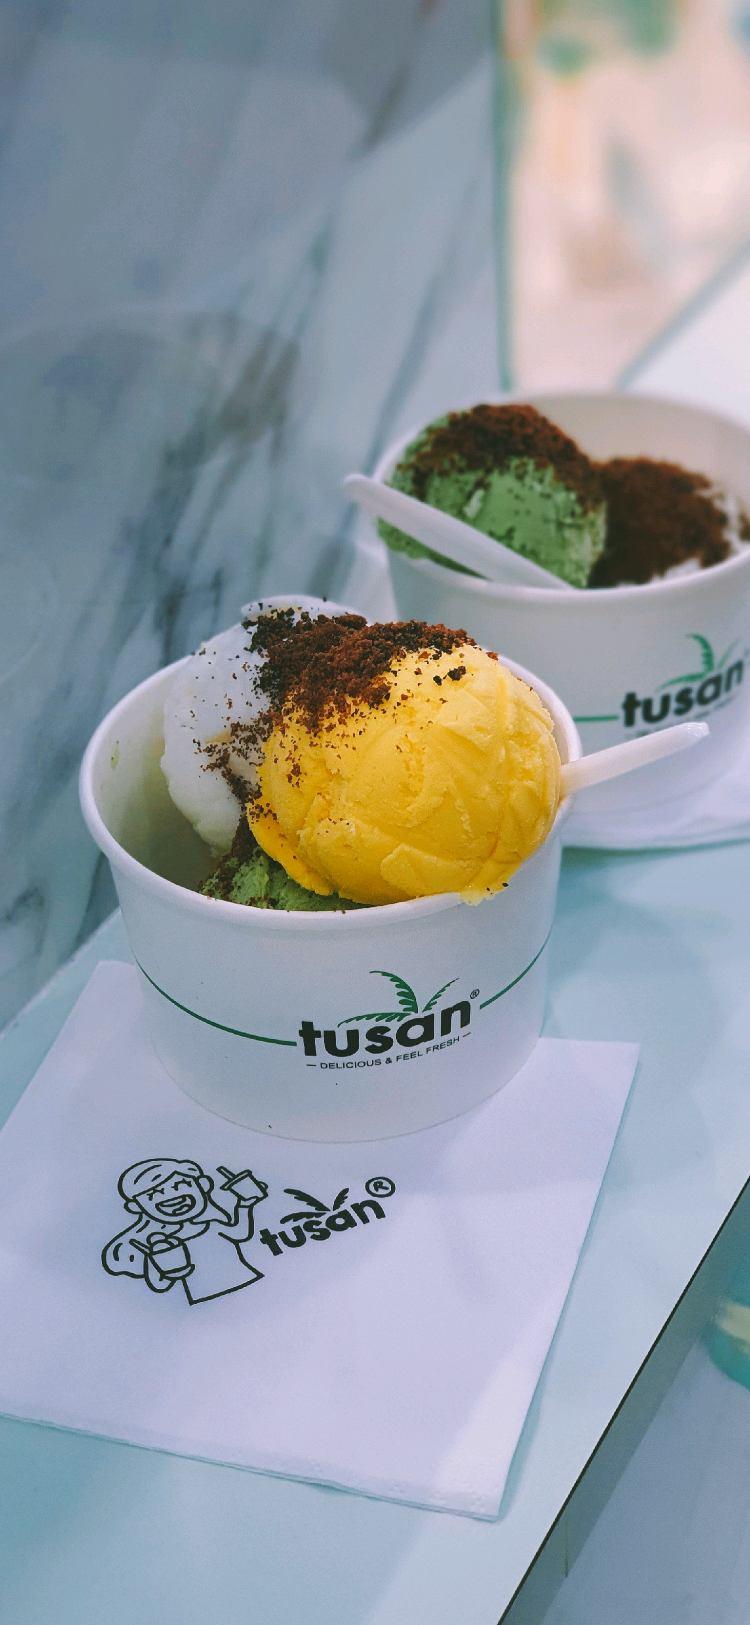 Photo of TUSAN Ice Cream - Kota Kinabalu, Sabah, Malaysia